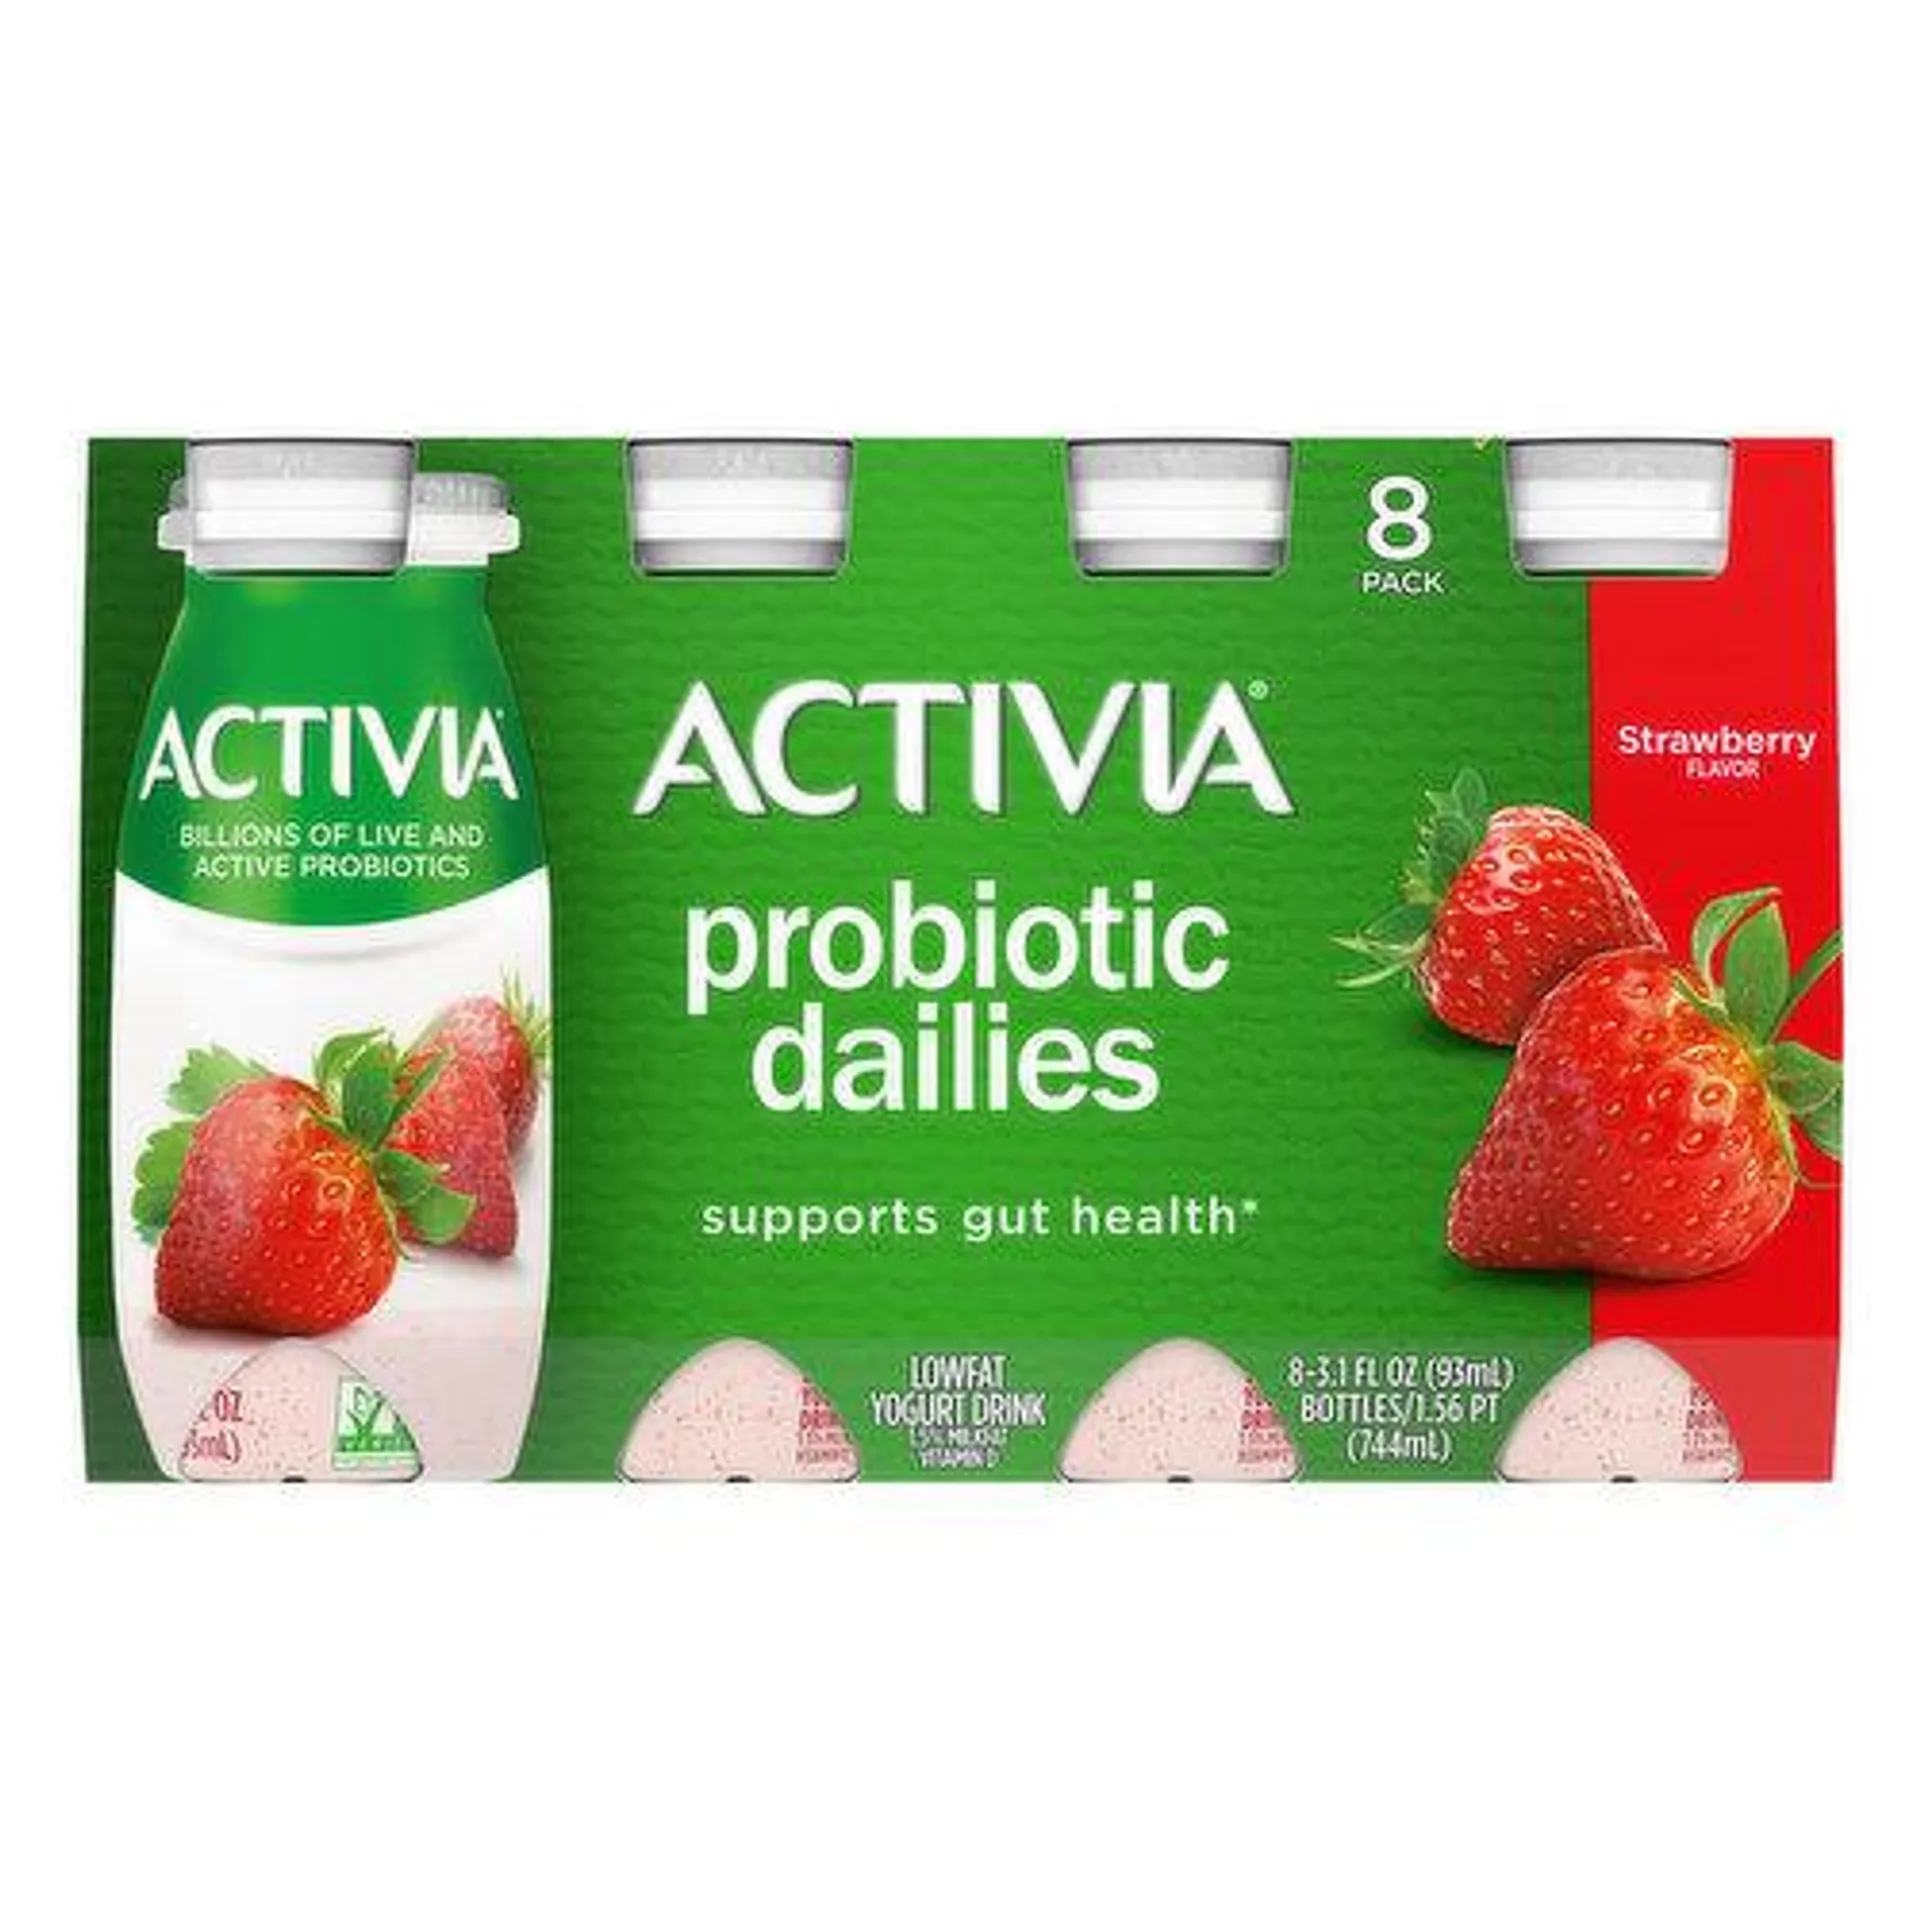 Activia Yogurt Drink, Lowfat, Strawberry Flavor, 8 Pack - 8 Each